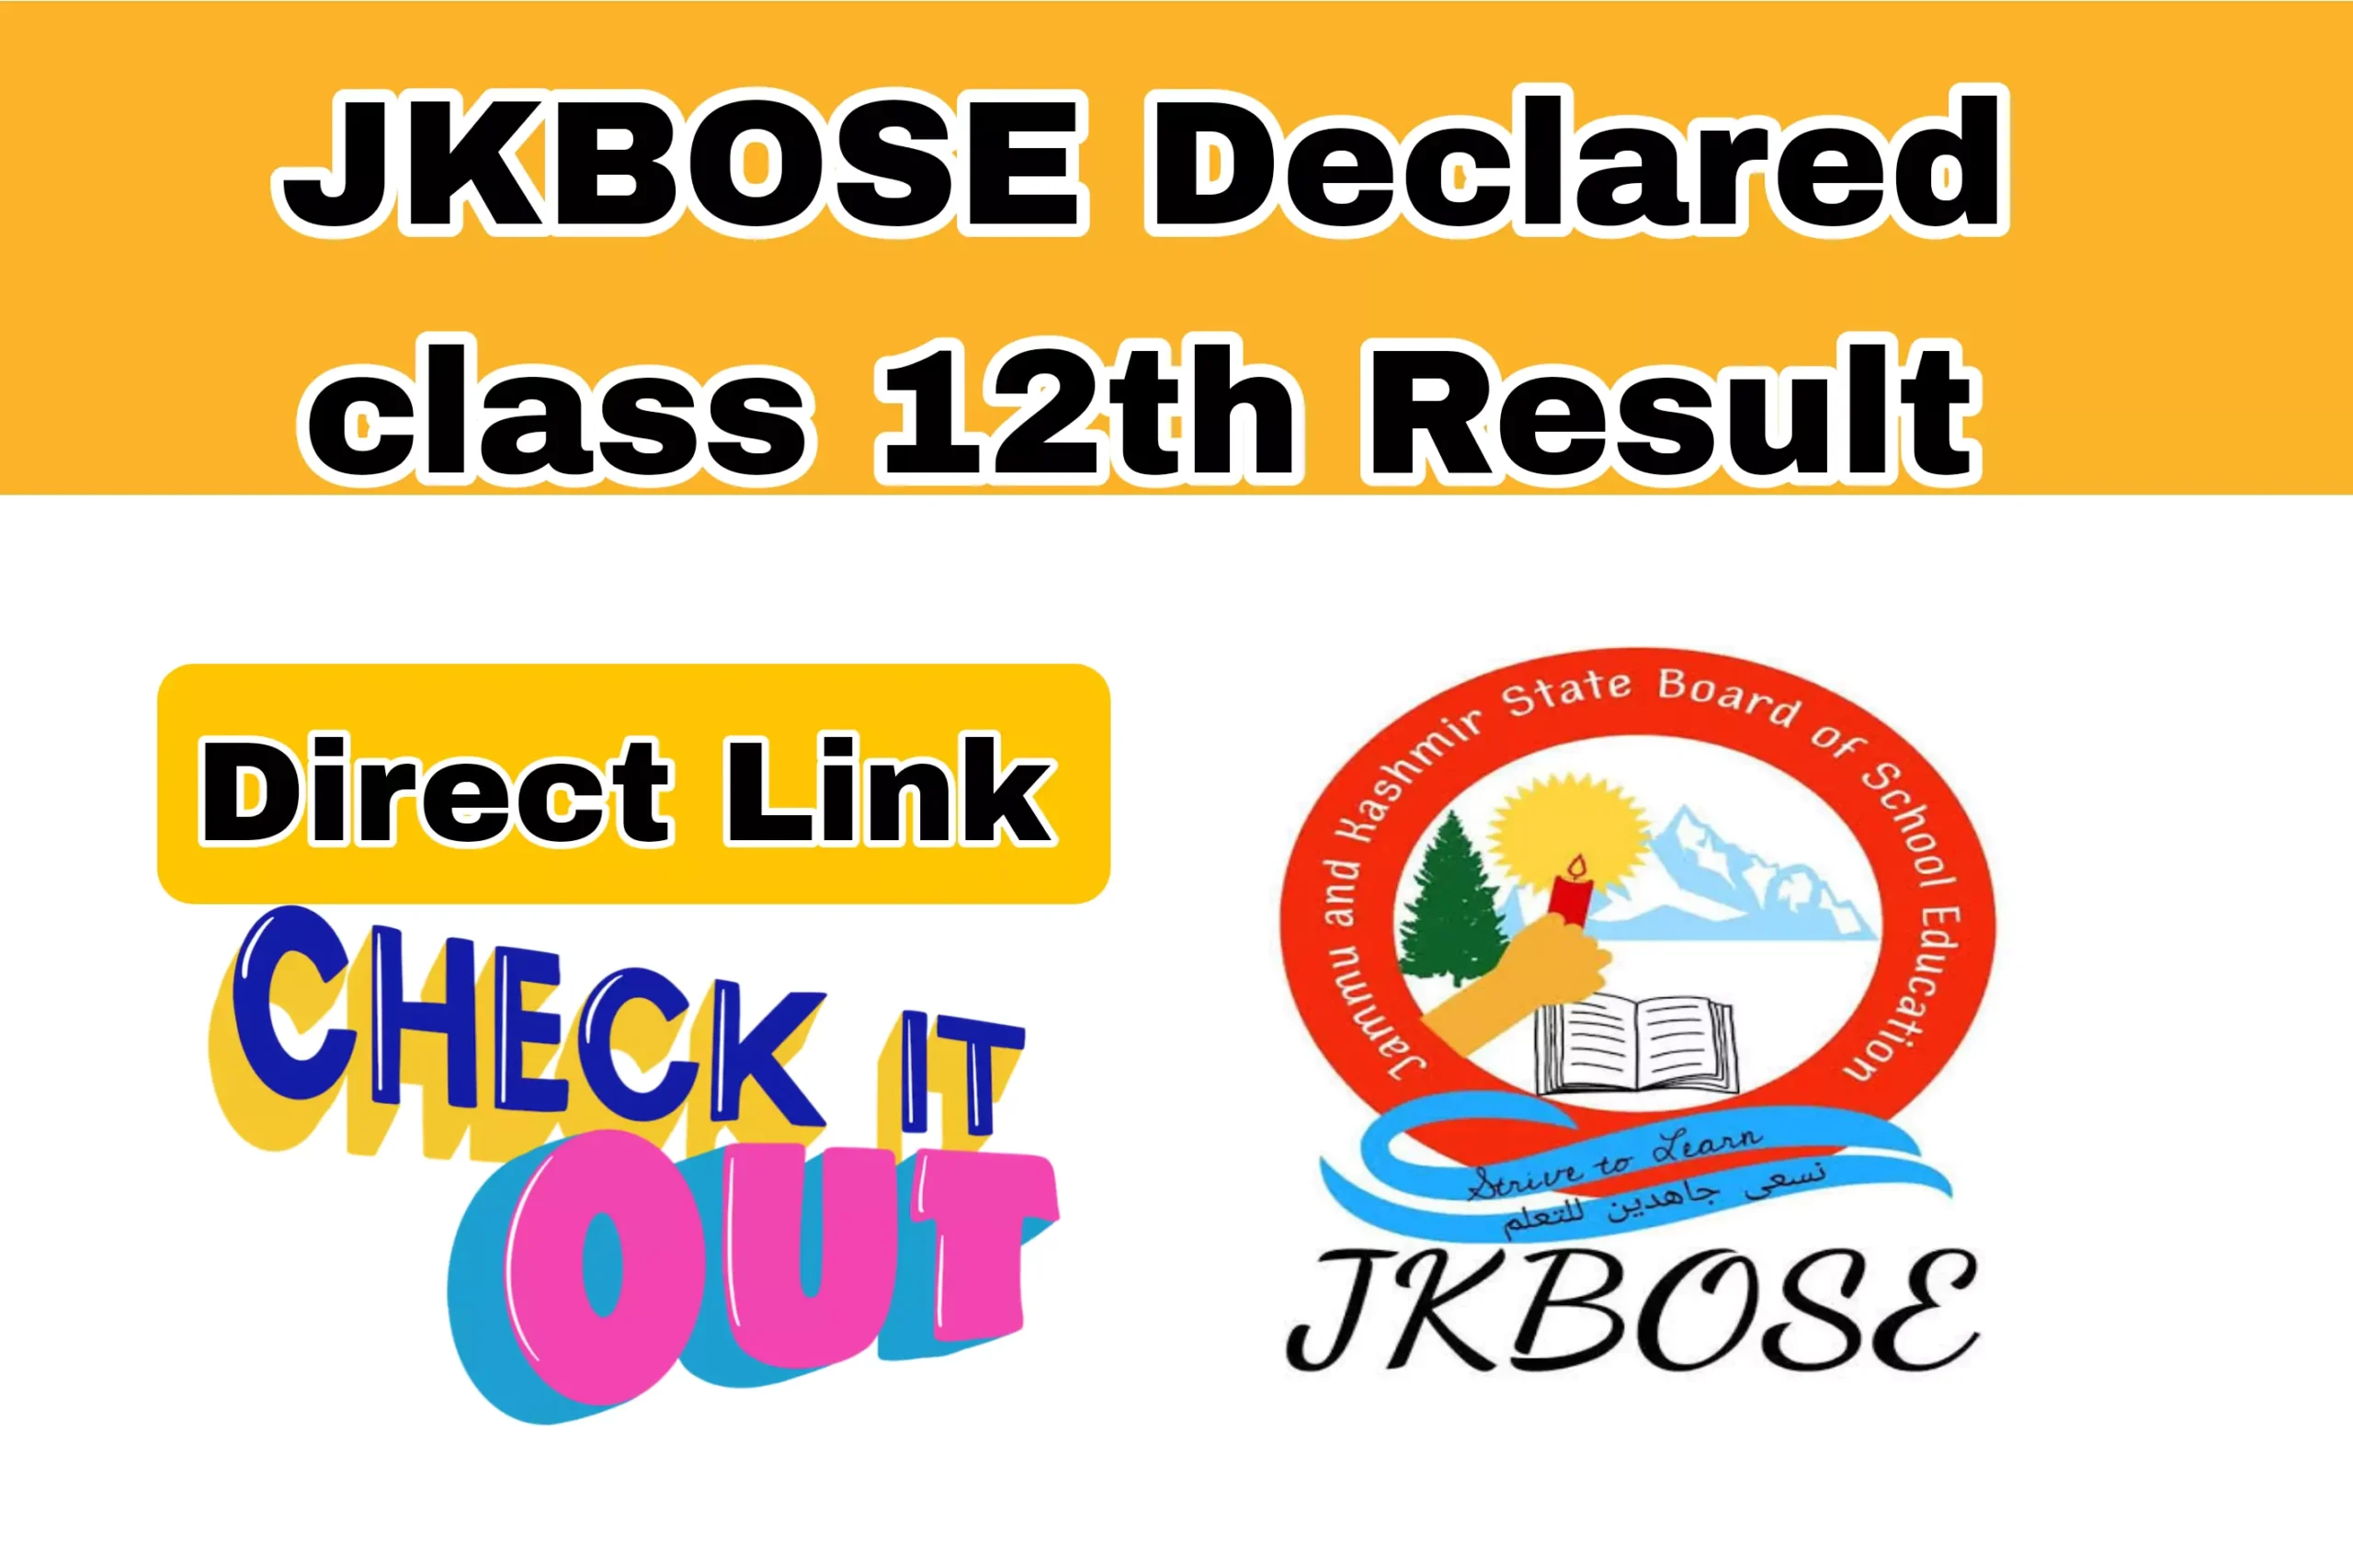 JKBOSE Declared class 12th Result